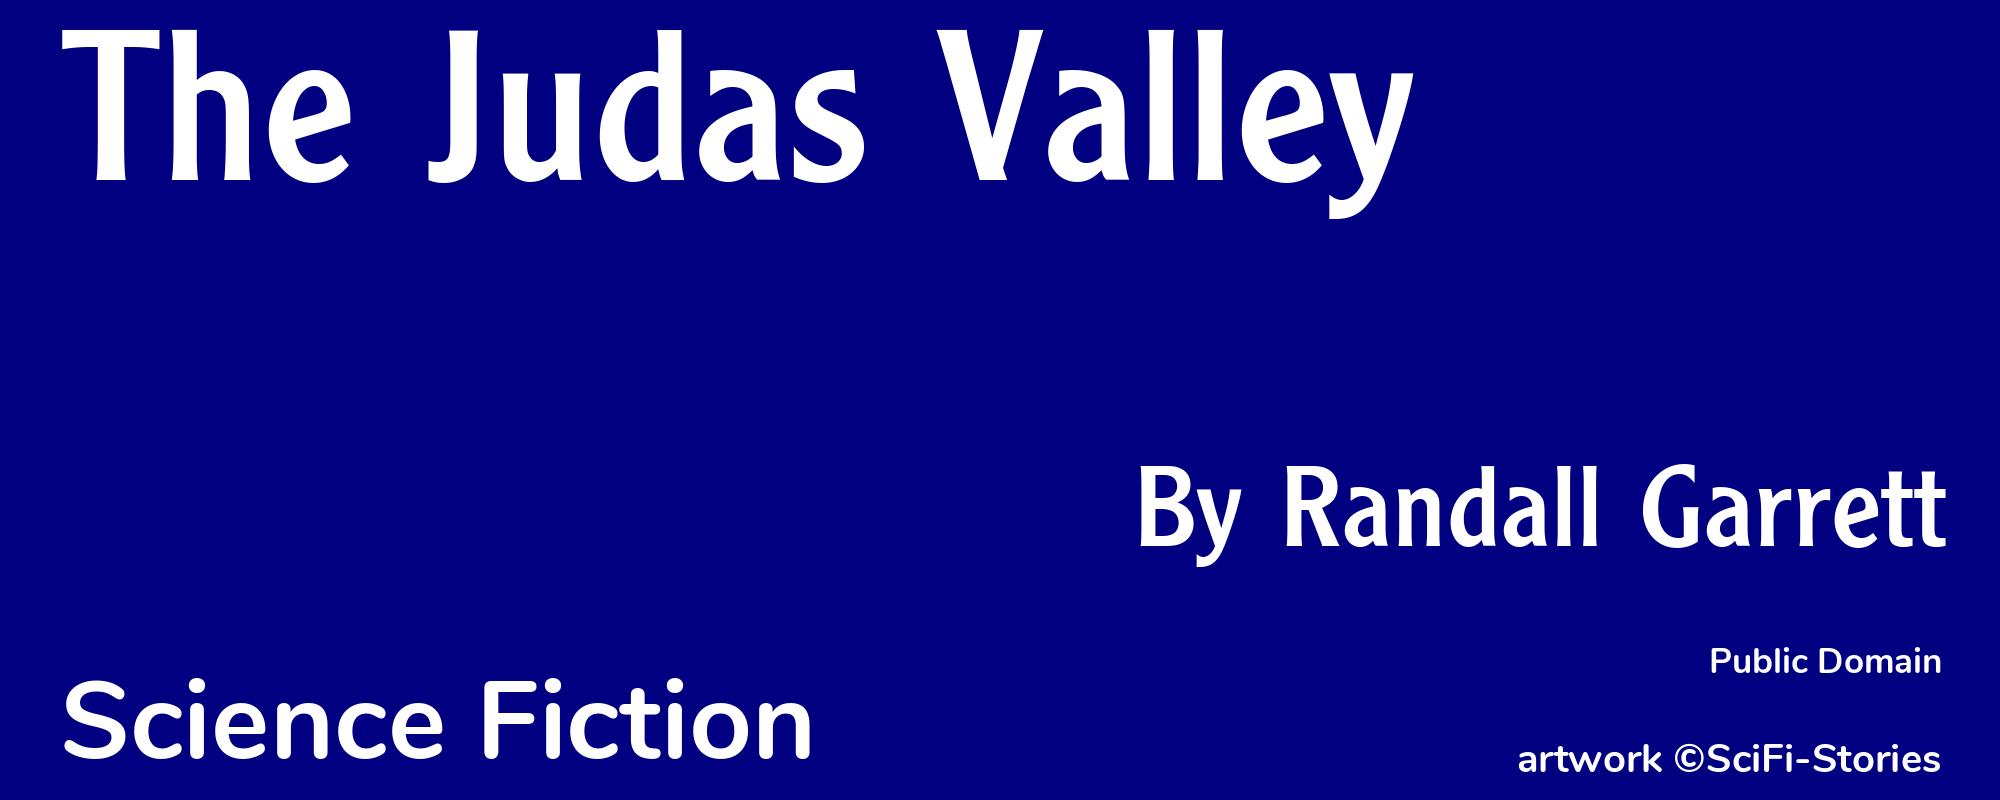 The Judas Valley - Cover